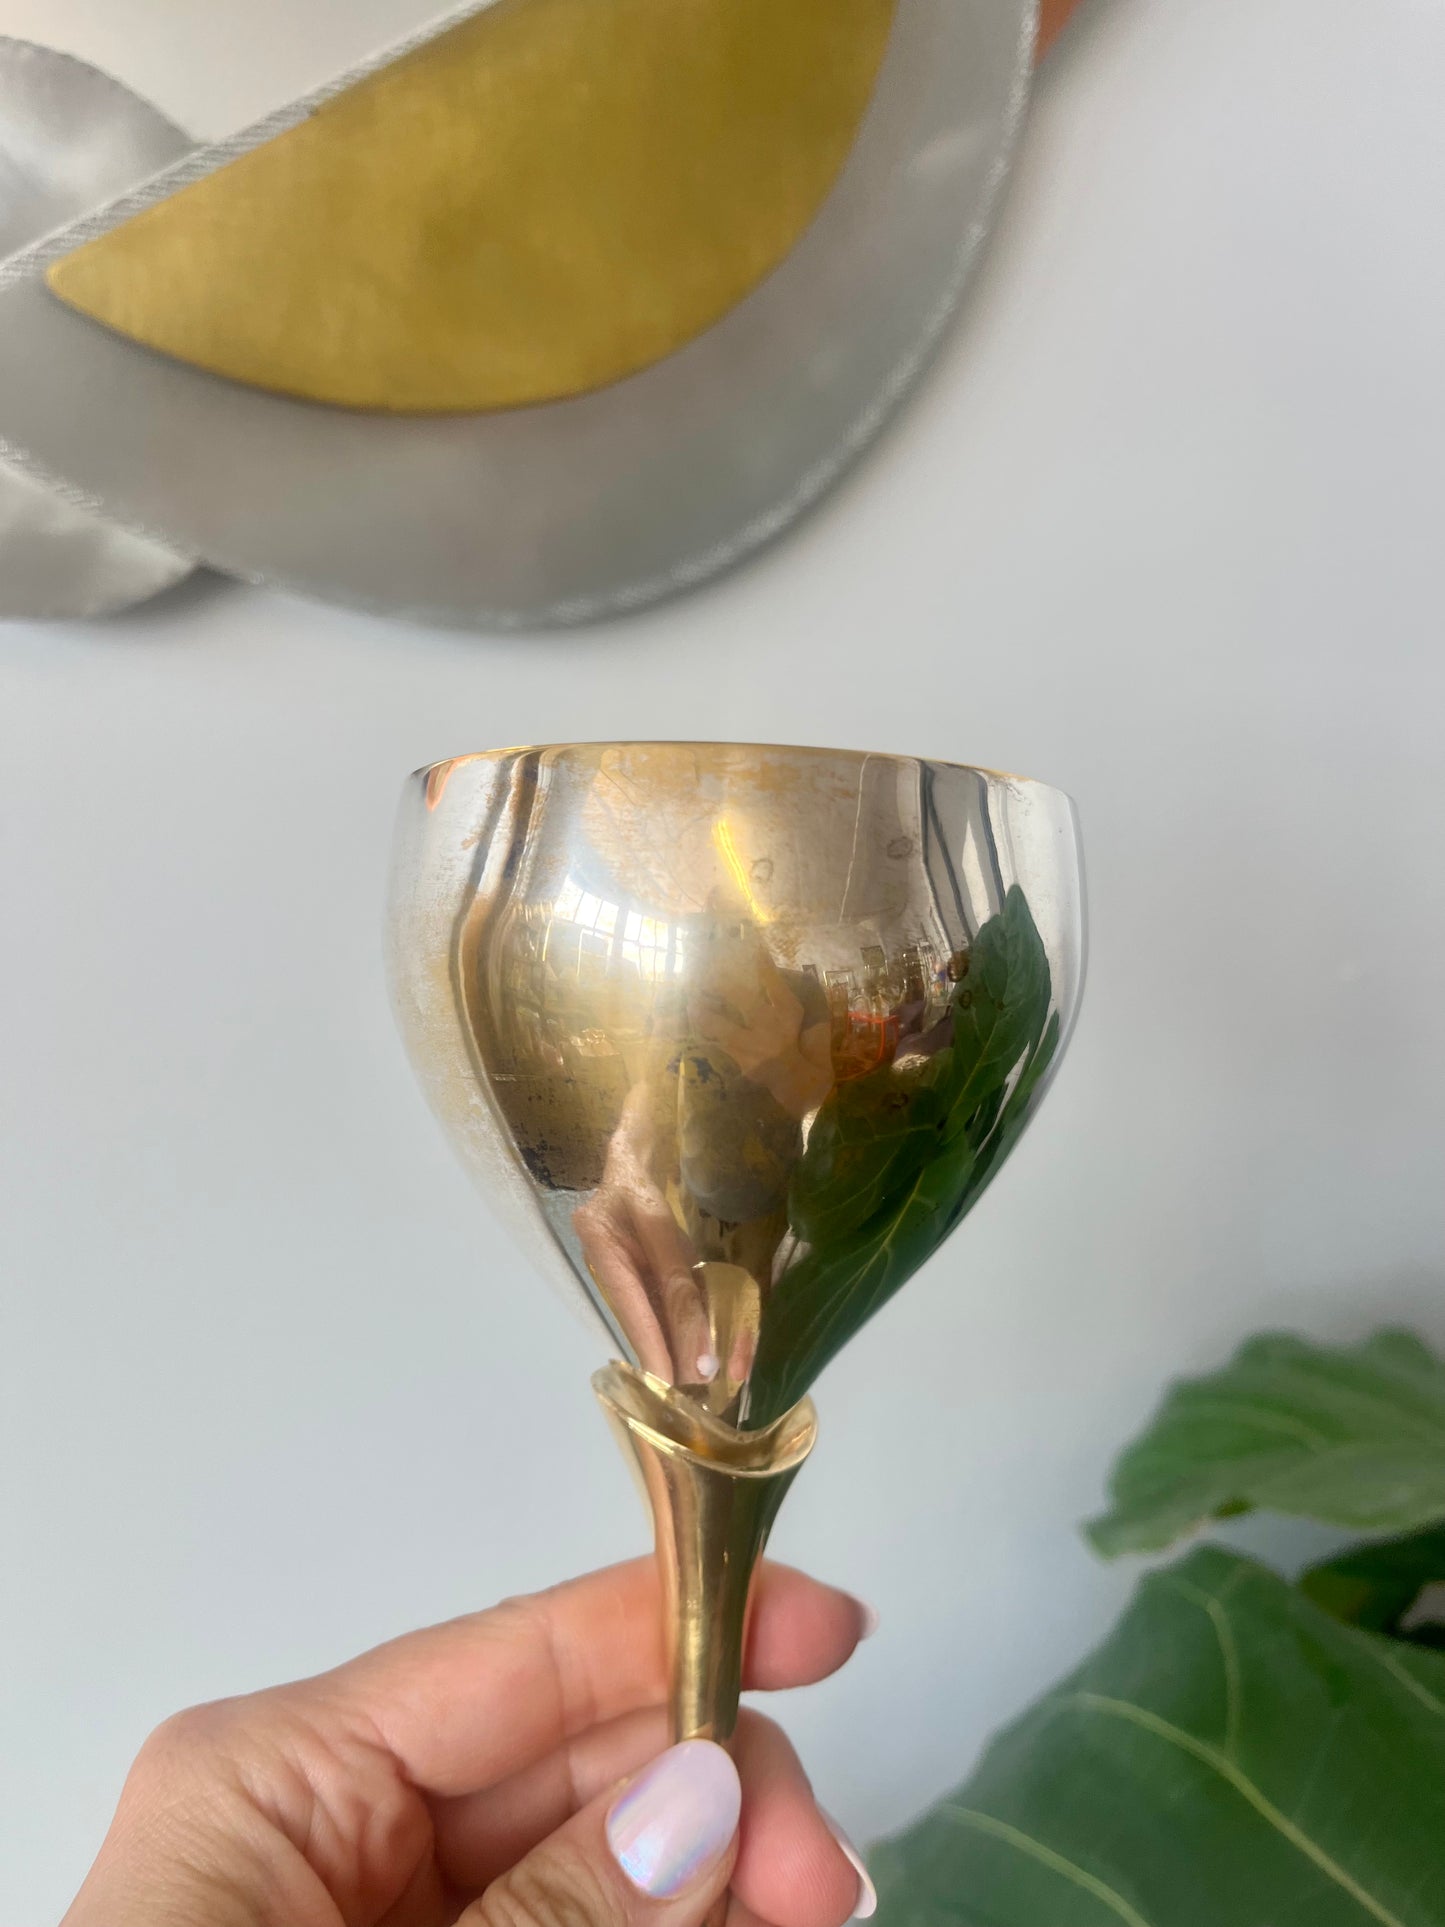 Vintage Brass and Silverplate Tulip Stem Wine Goblets